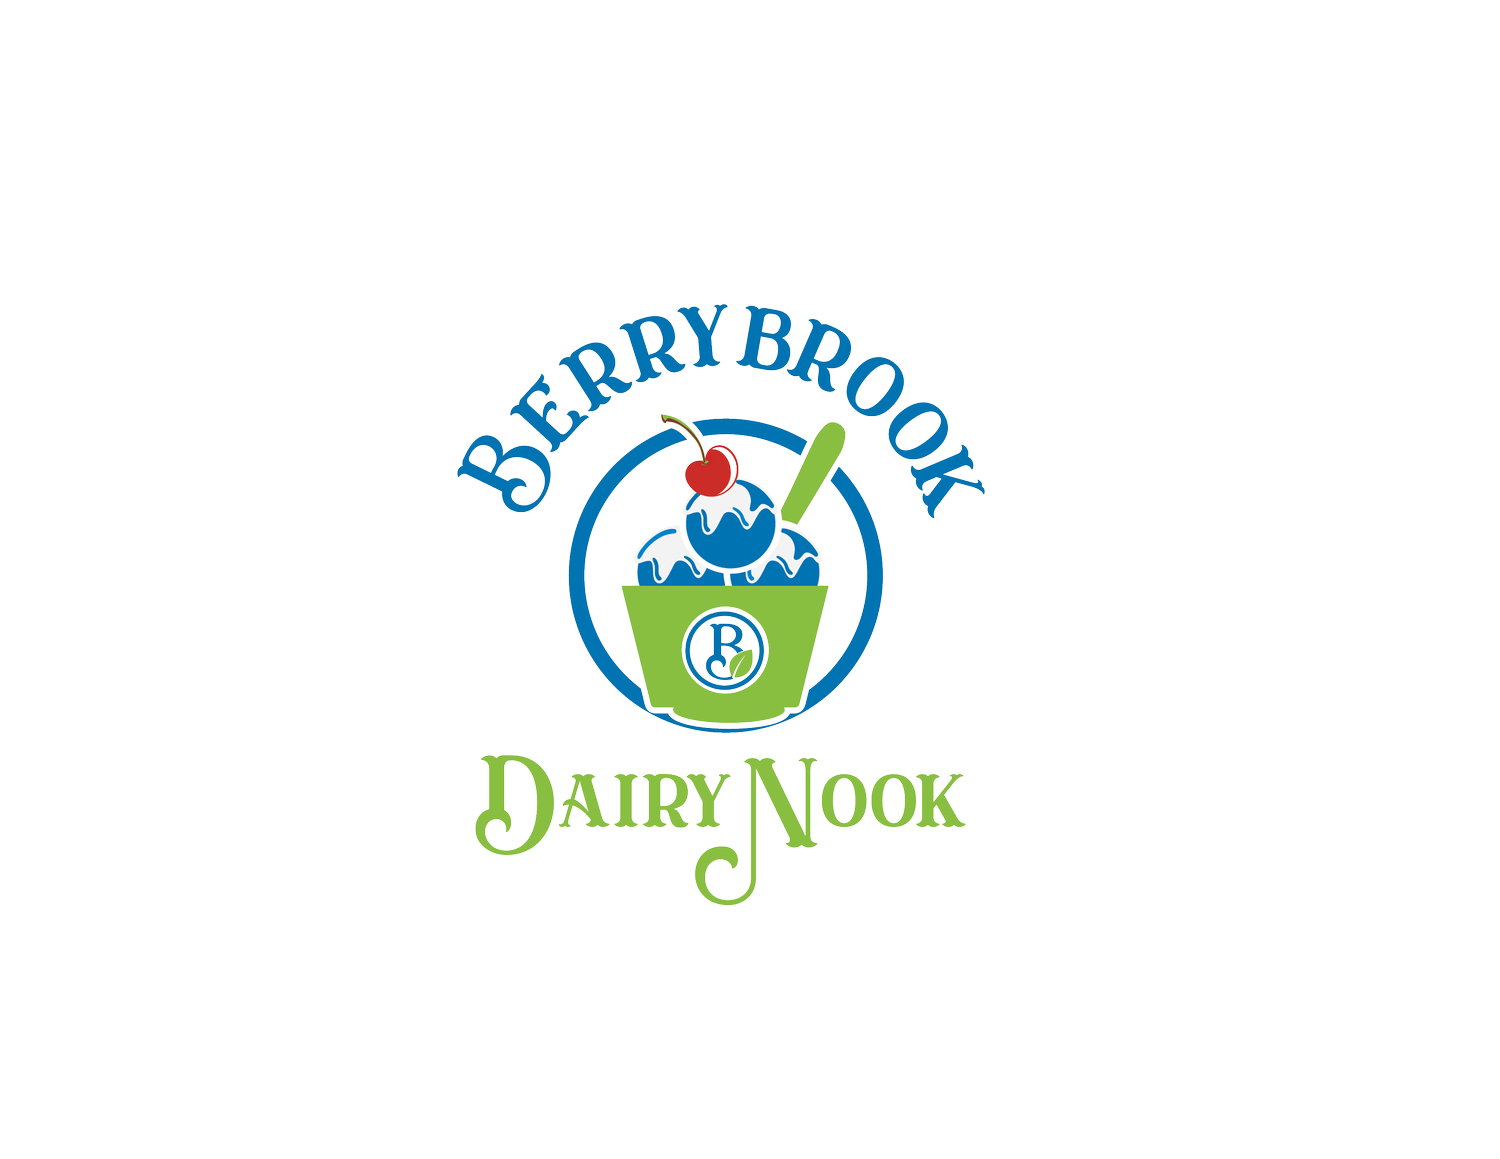 Berrybrook Dairy Nook